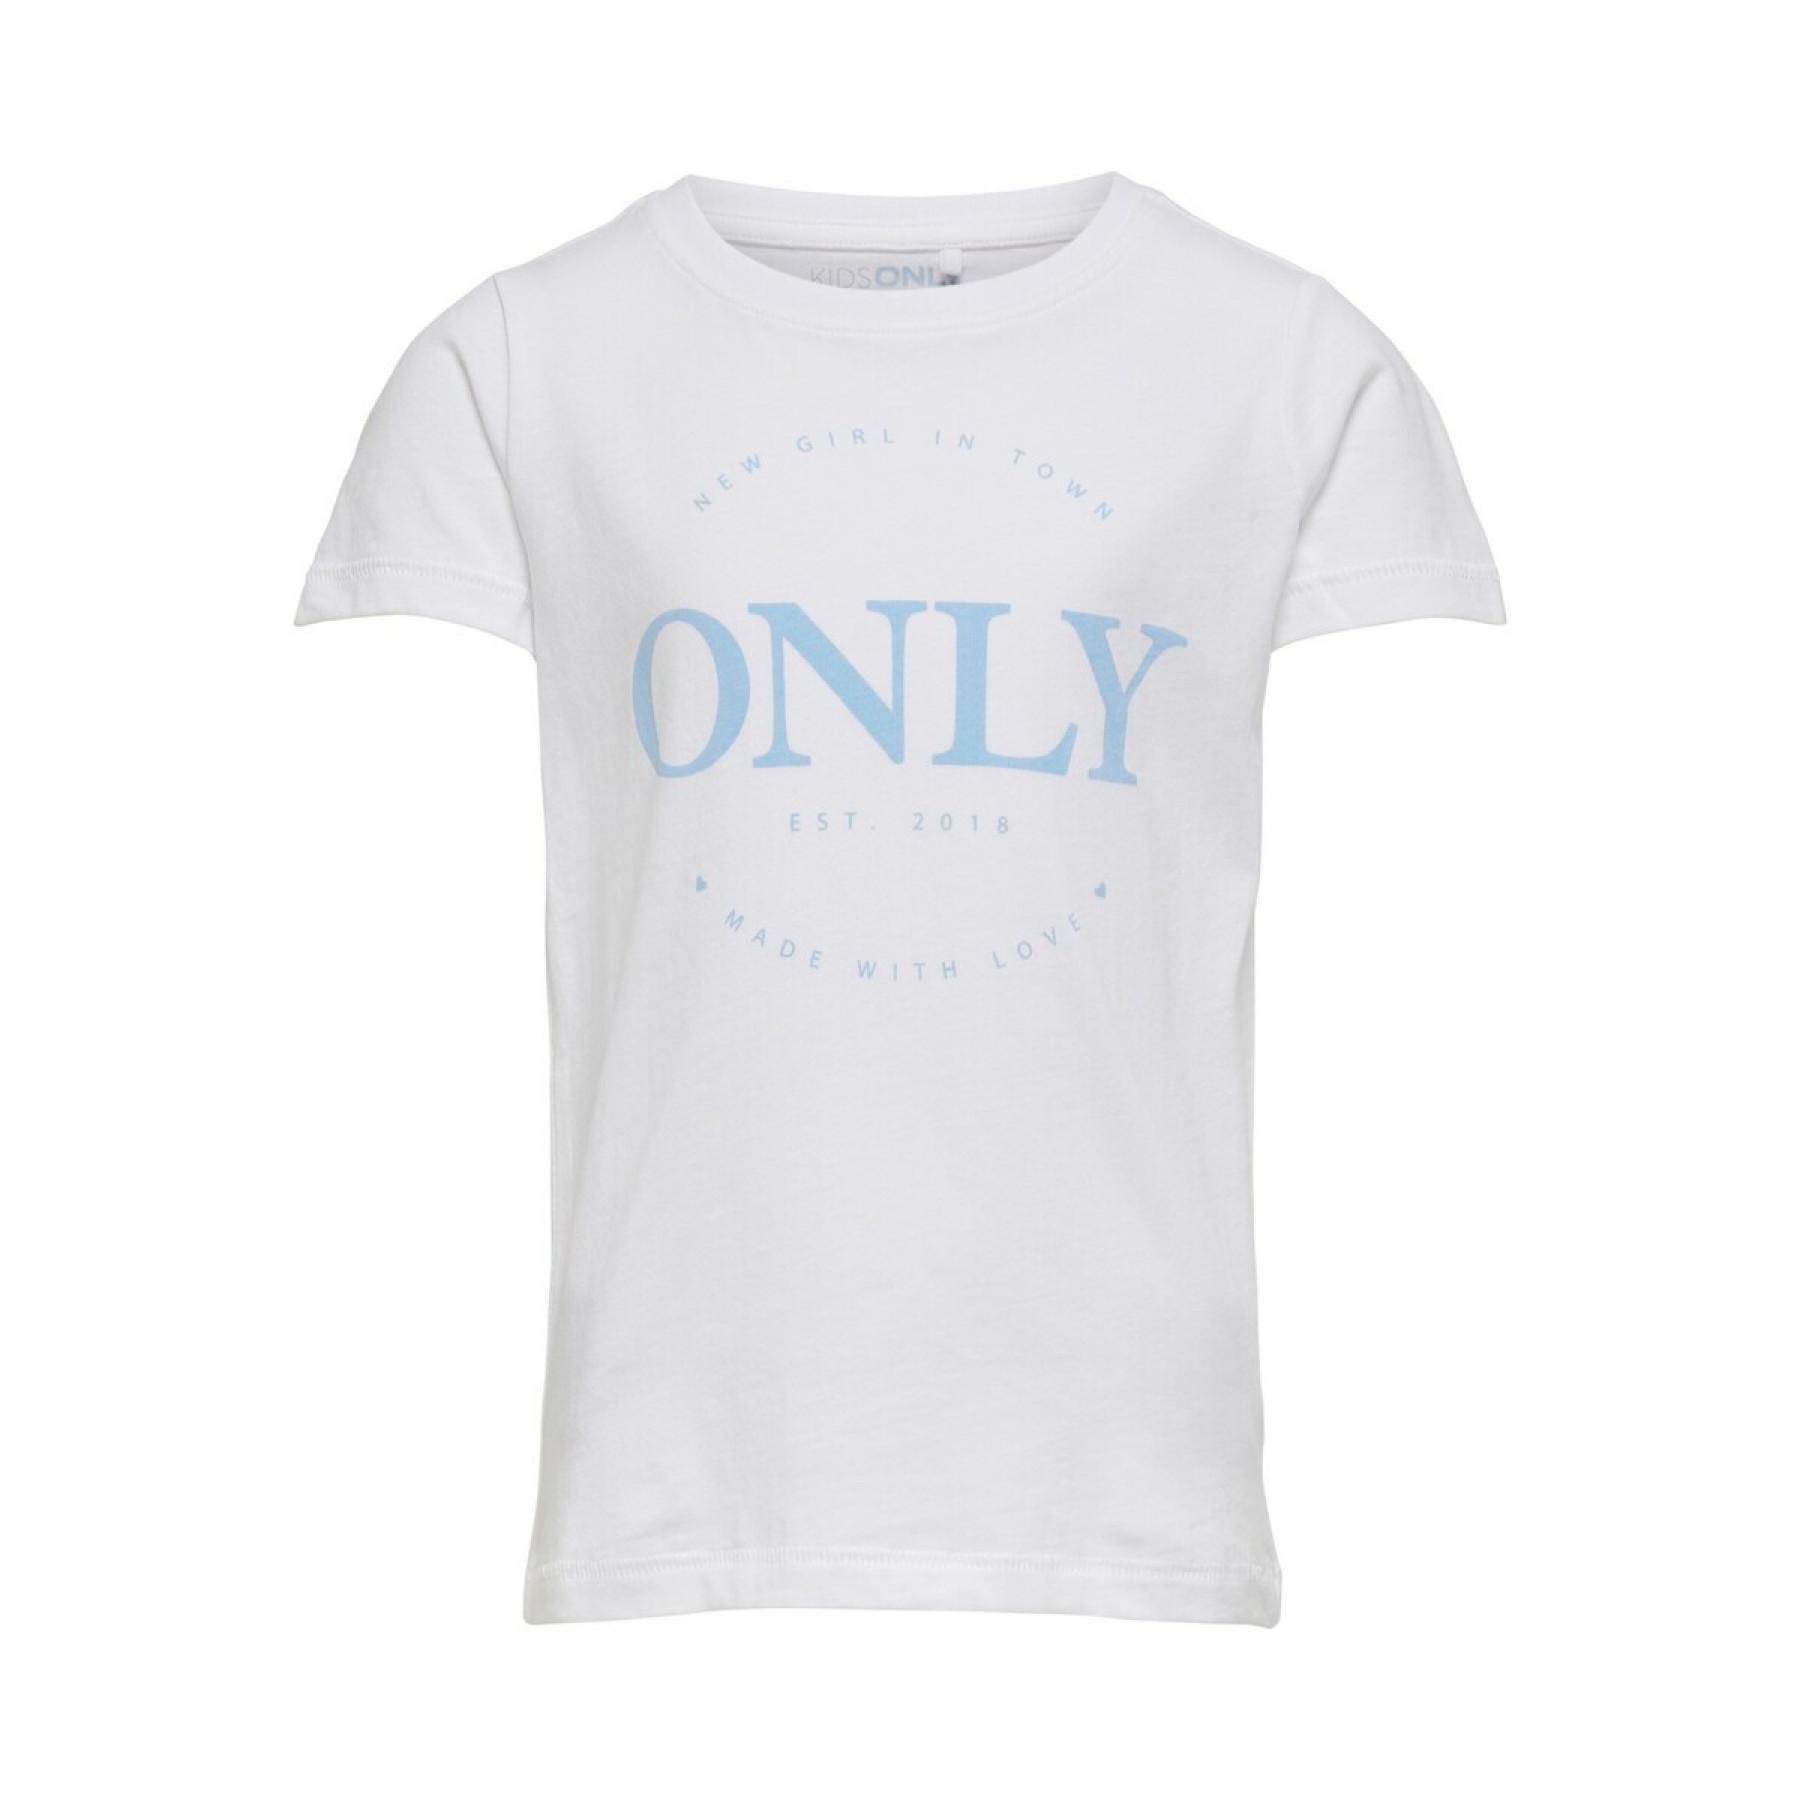 T-shirt för flickor Only kids manches courtes Logo life